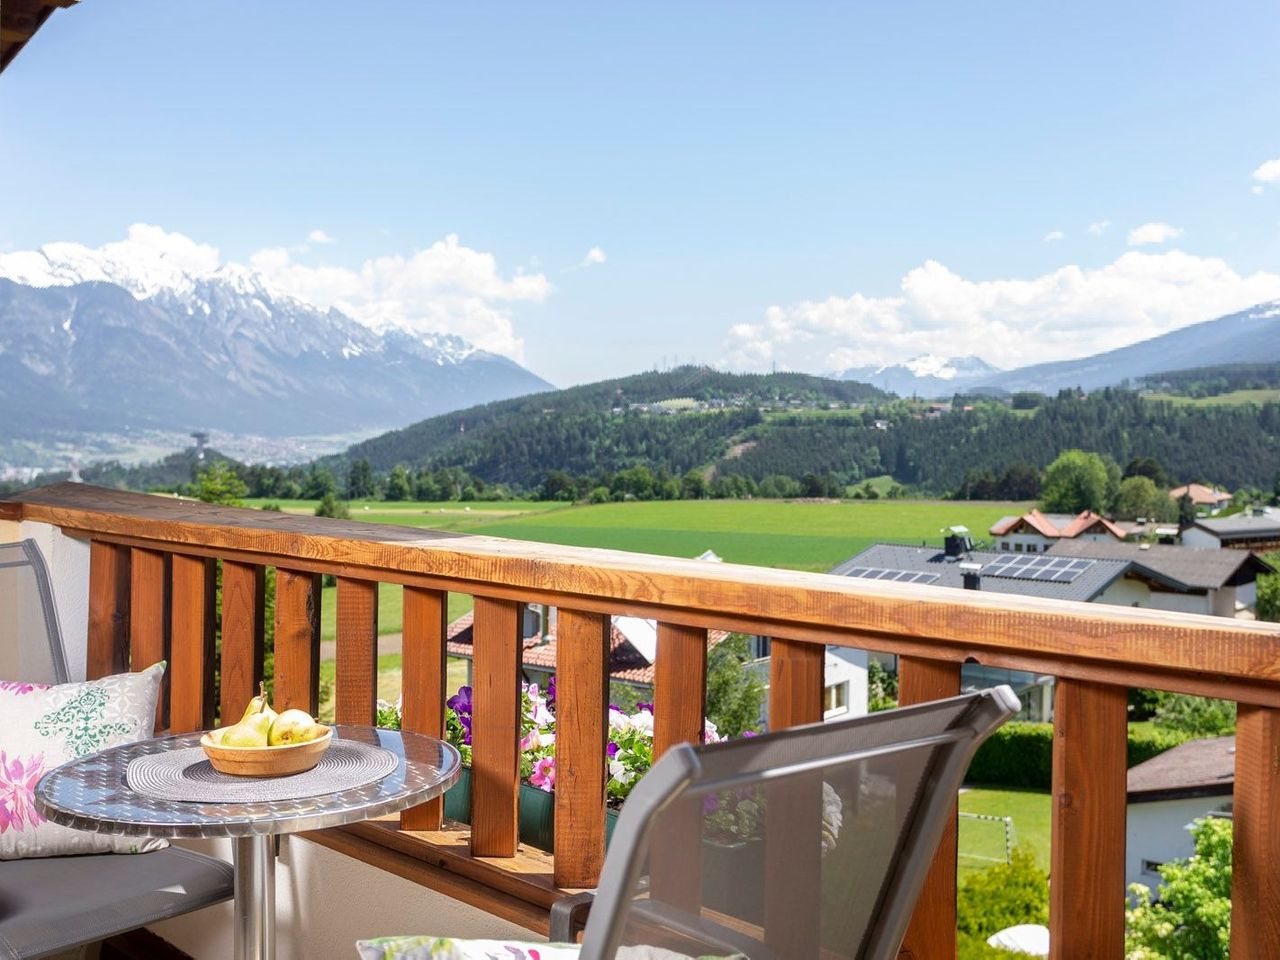 Tiroler Alpen - Wanderregion Innsbruck- 3 Nächte